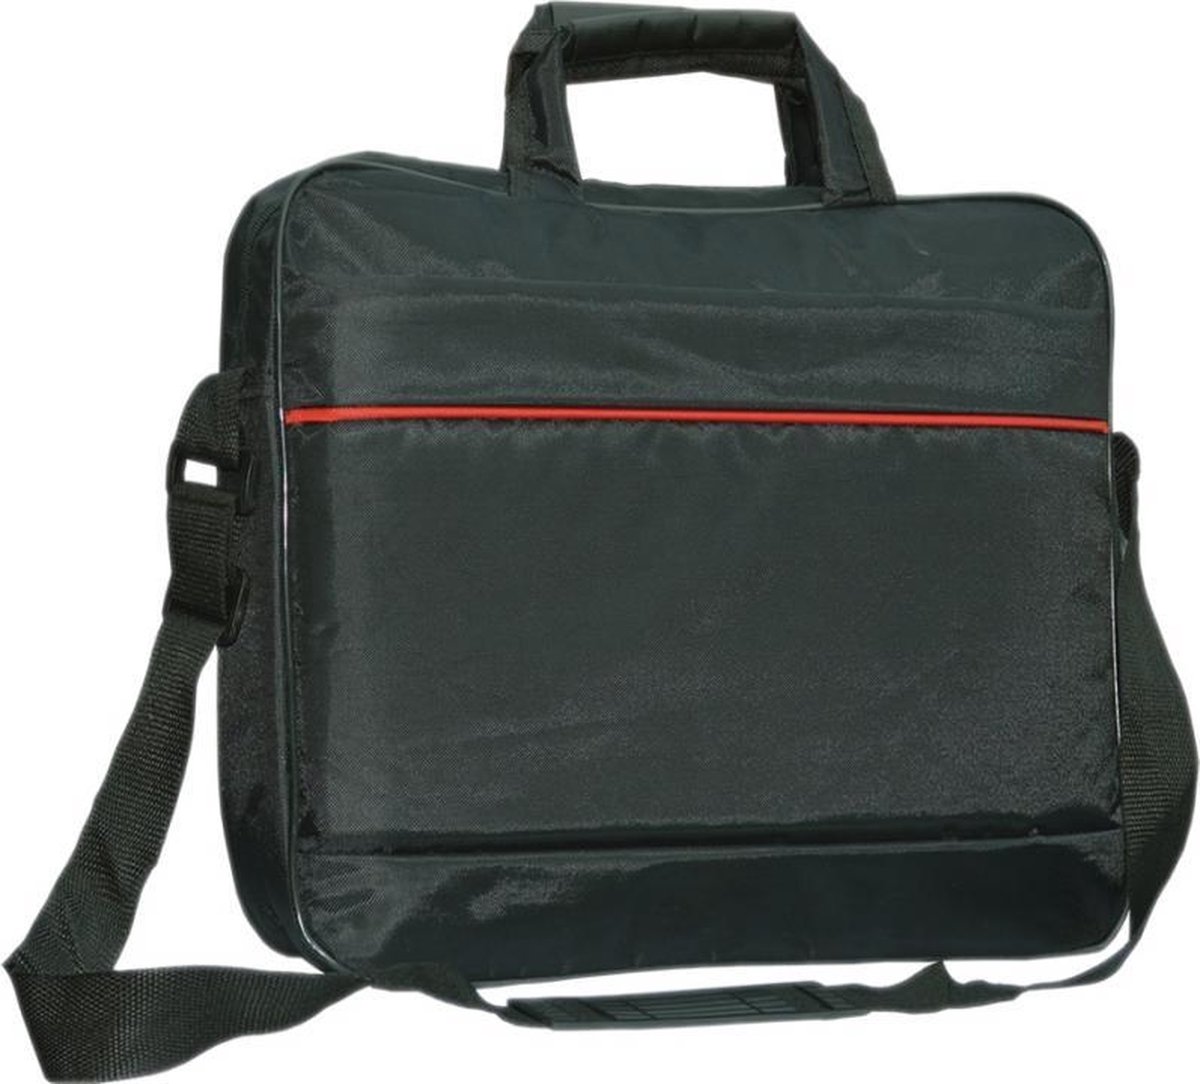 Asus Transformer Book T300fa laptoptas messenger bag / schoudertas / tas , zwart , merk i12Cover